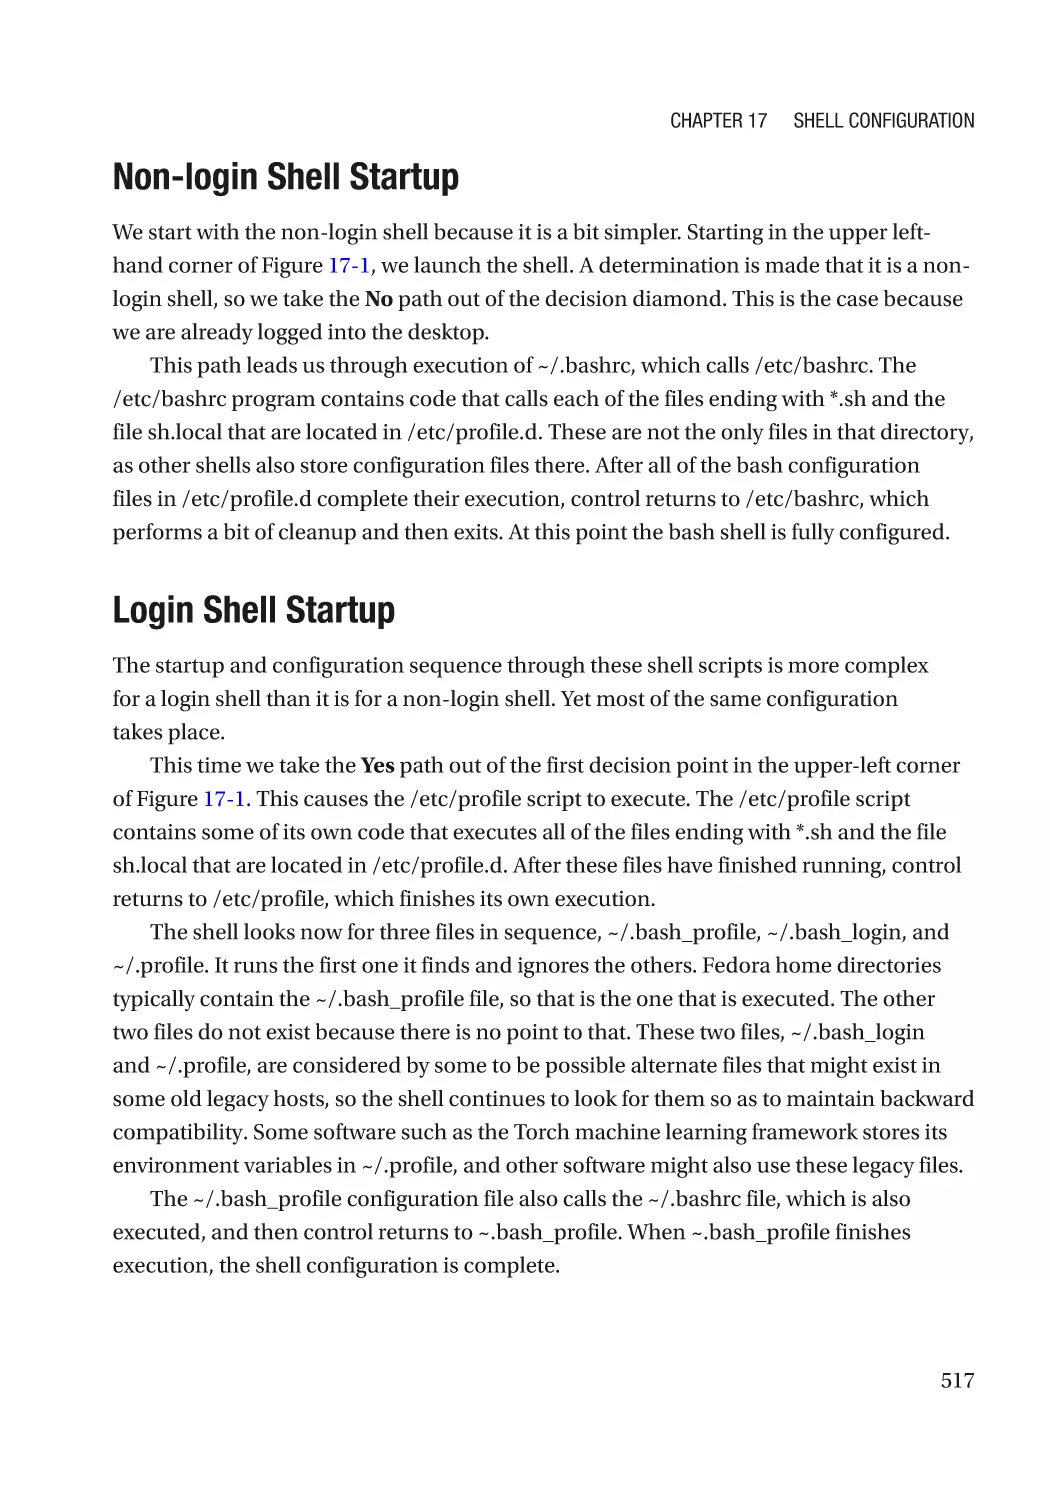 Non-login Shell Startup
Login Shell Startup